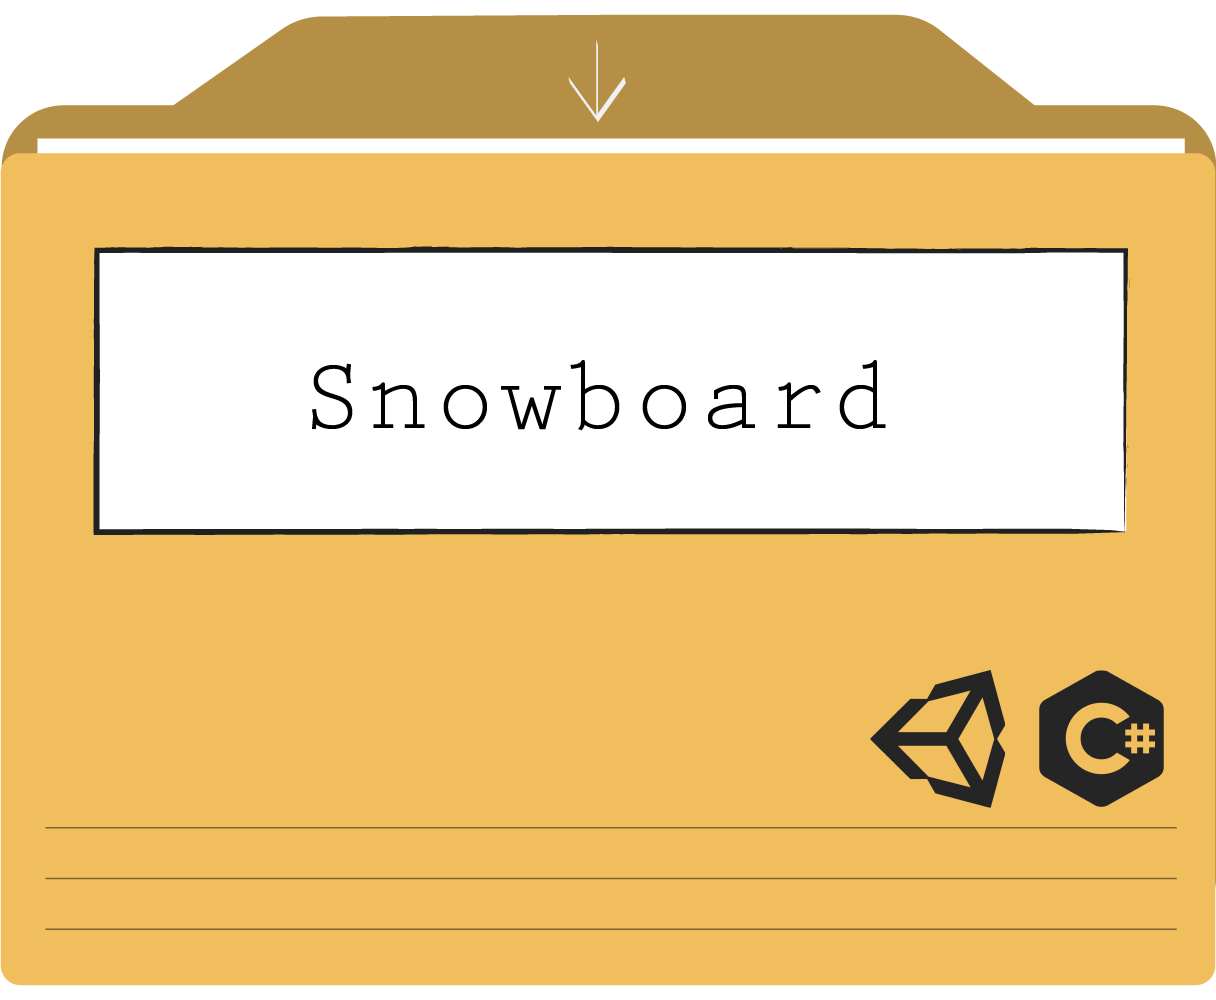 Snowboarding project folder